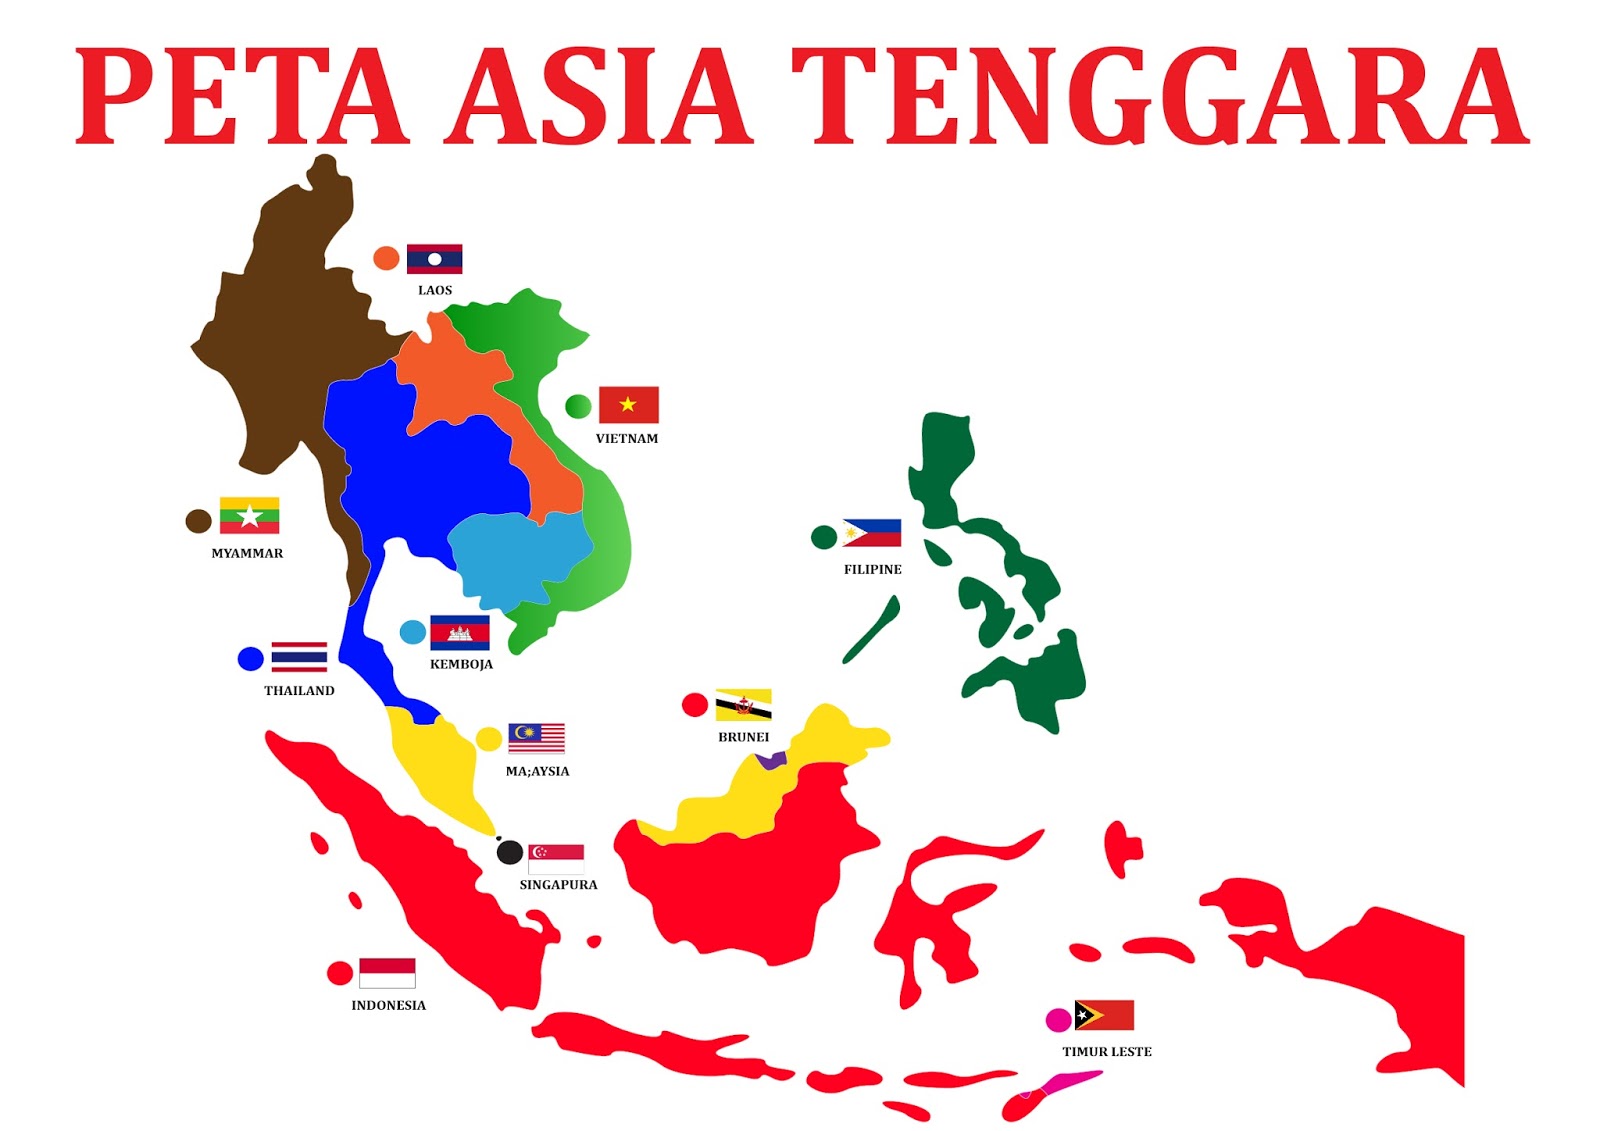 Peta Asia Tenggara (Southeast Asia Map)